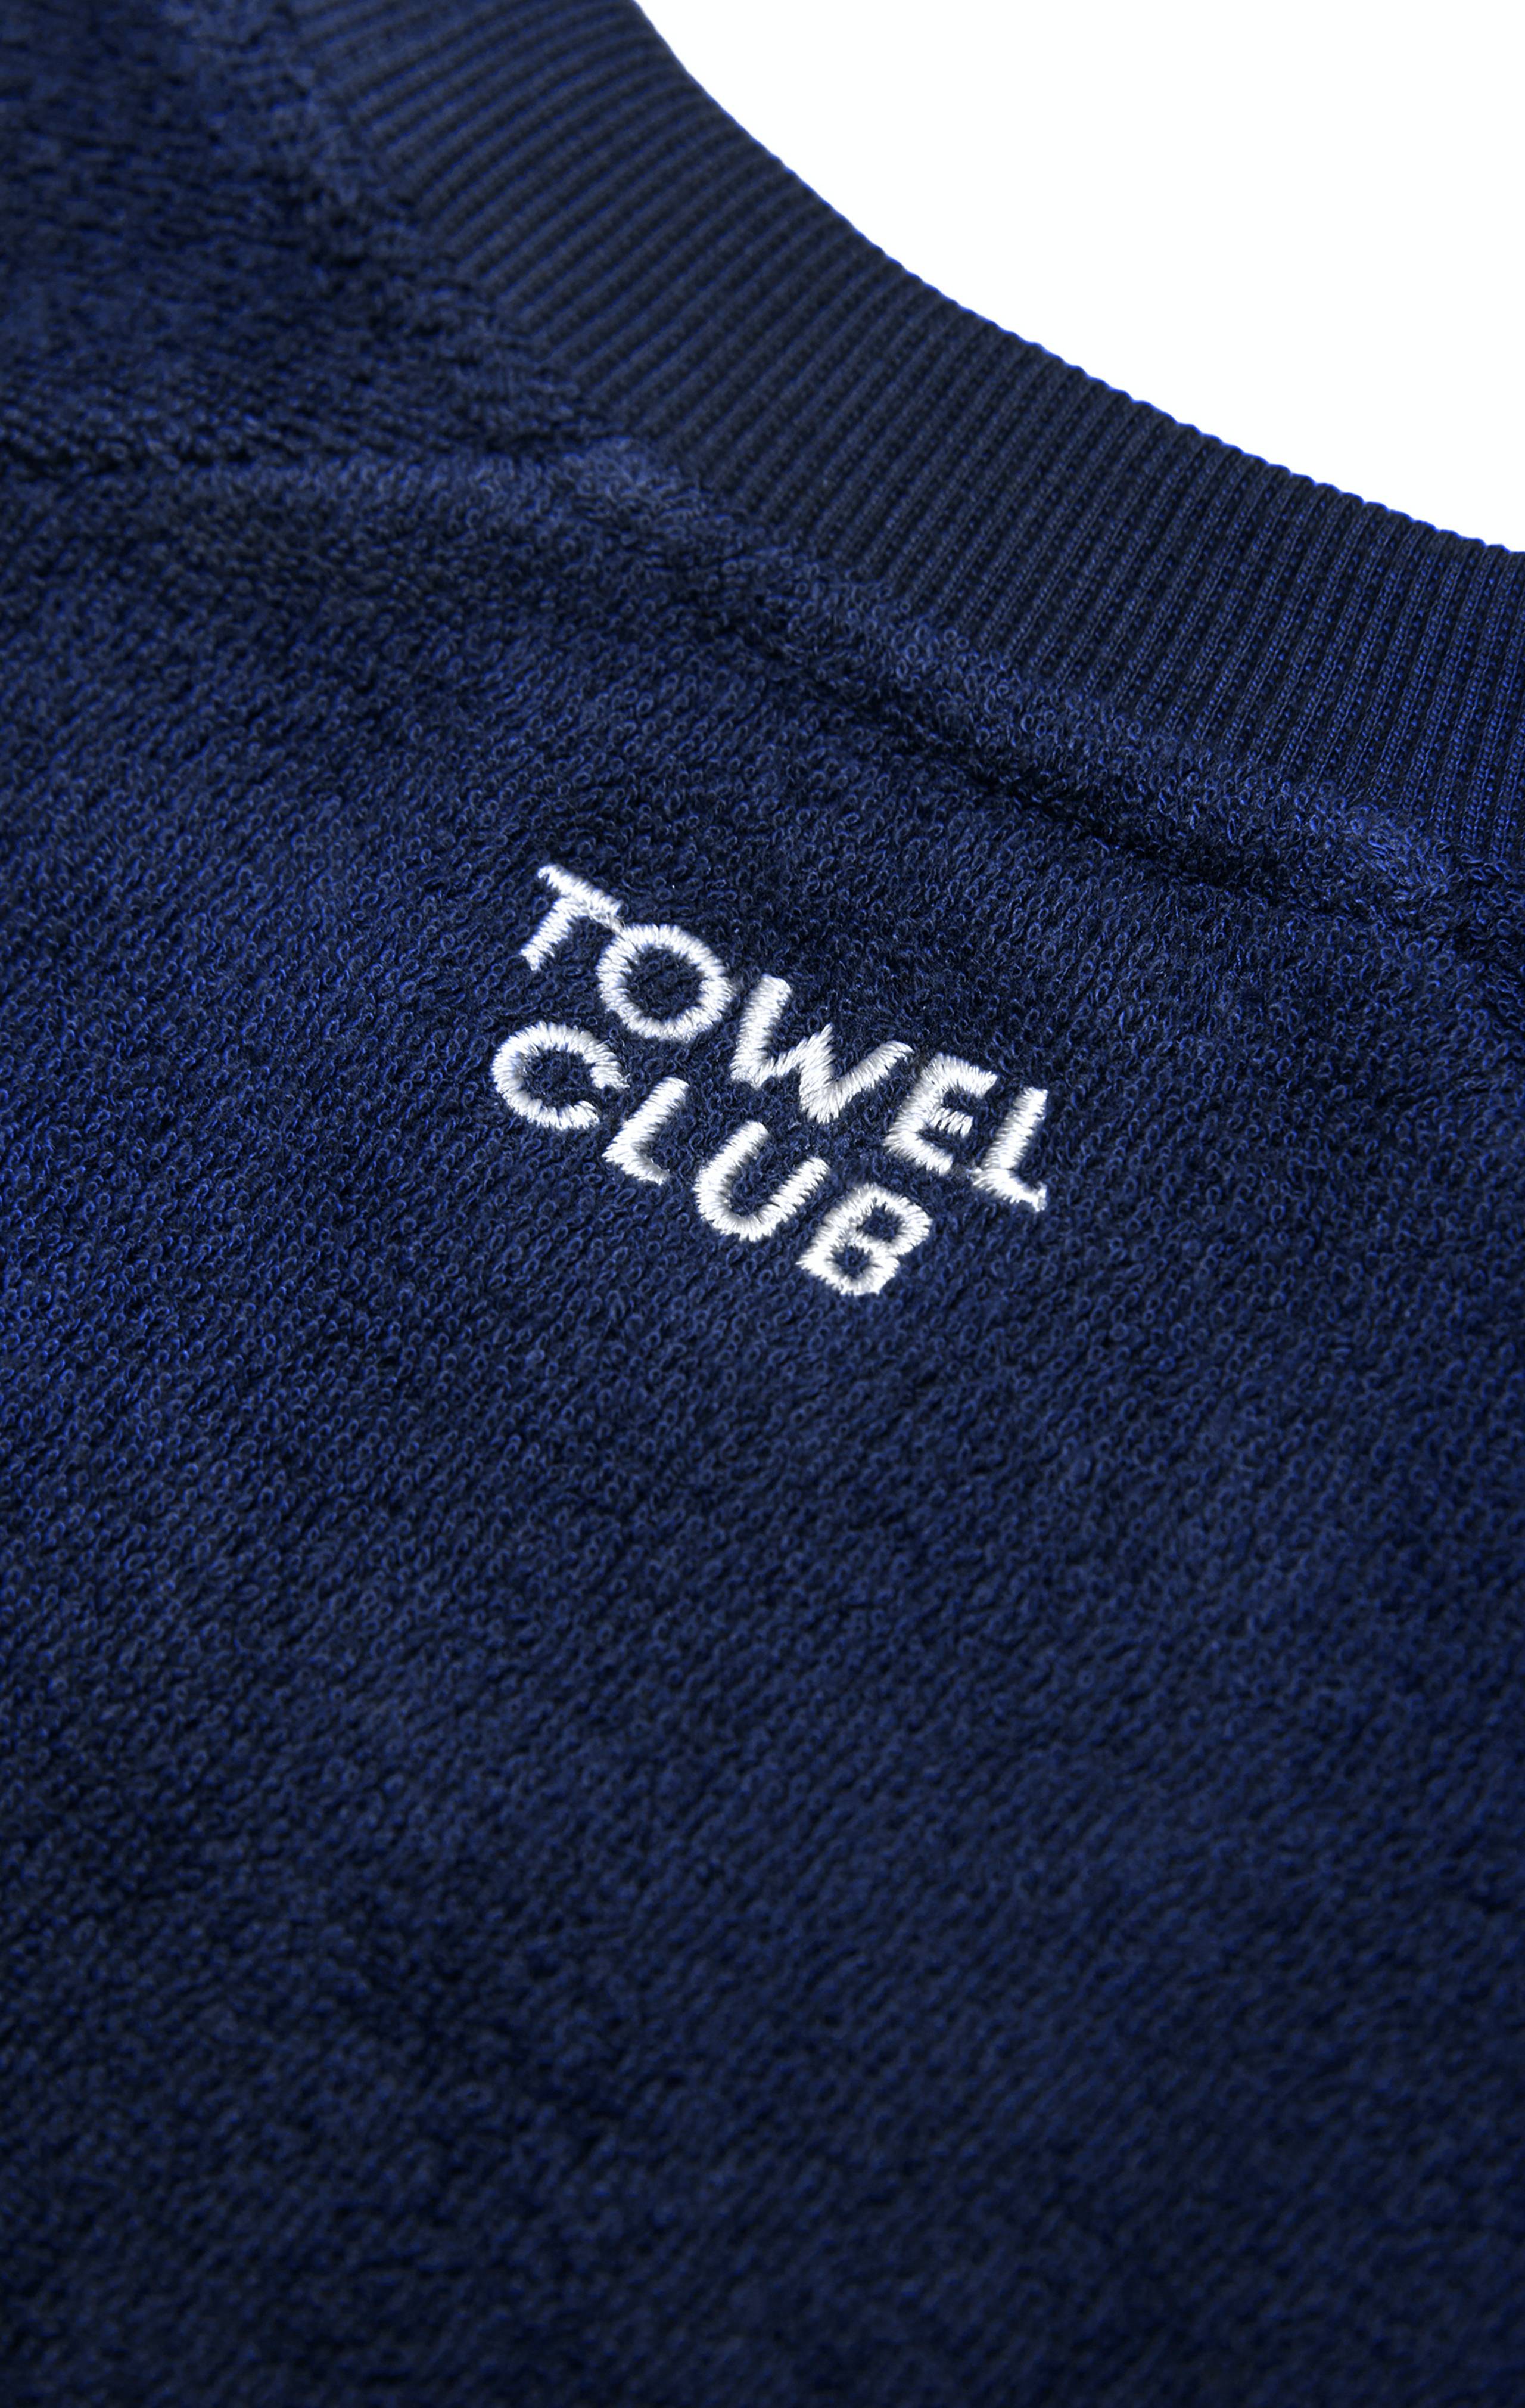 Onepiece Towel Club Crewneck Navy - 2